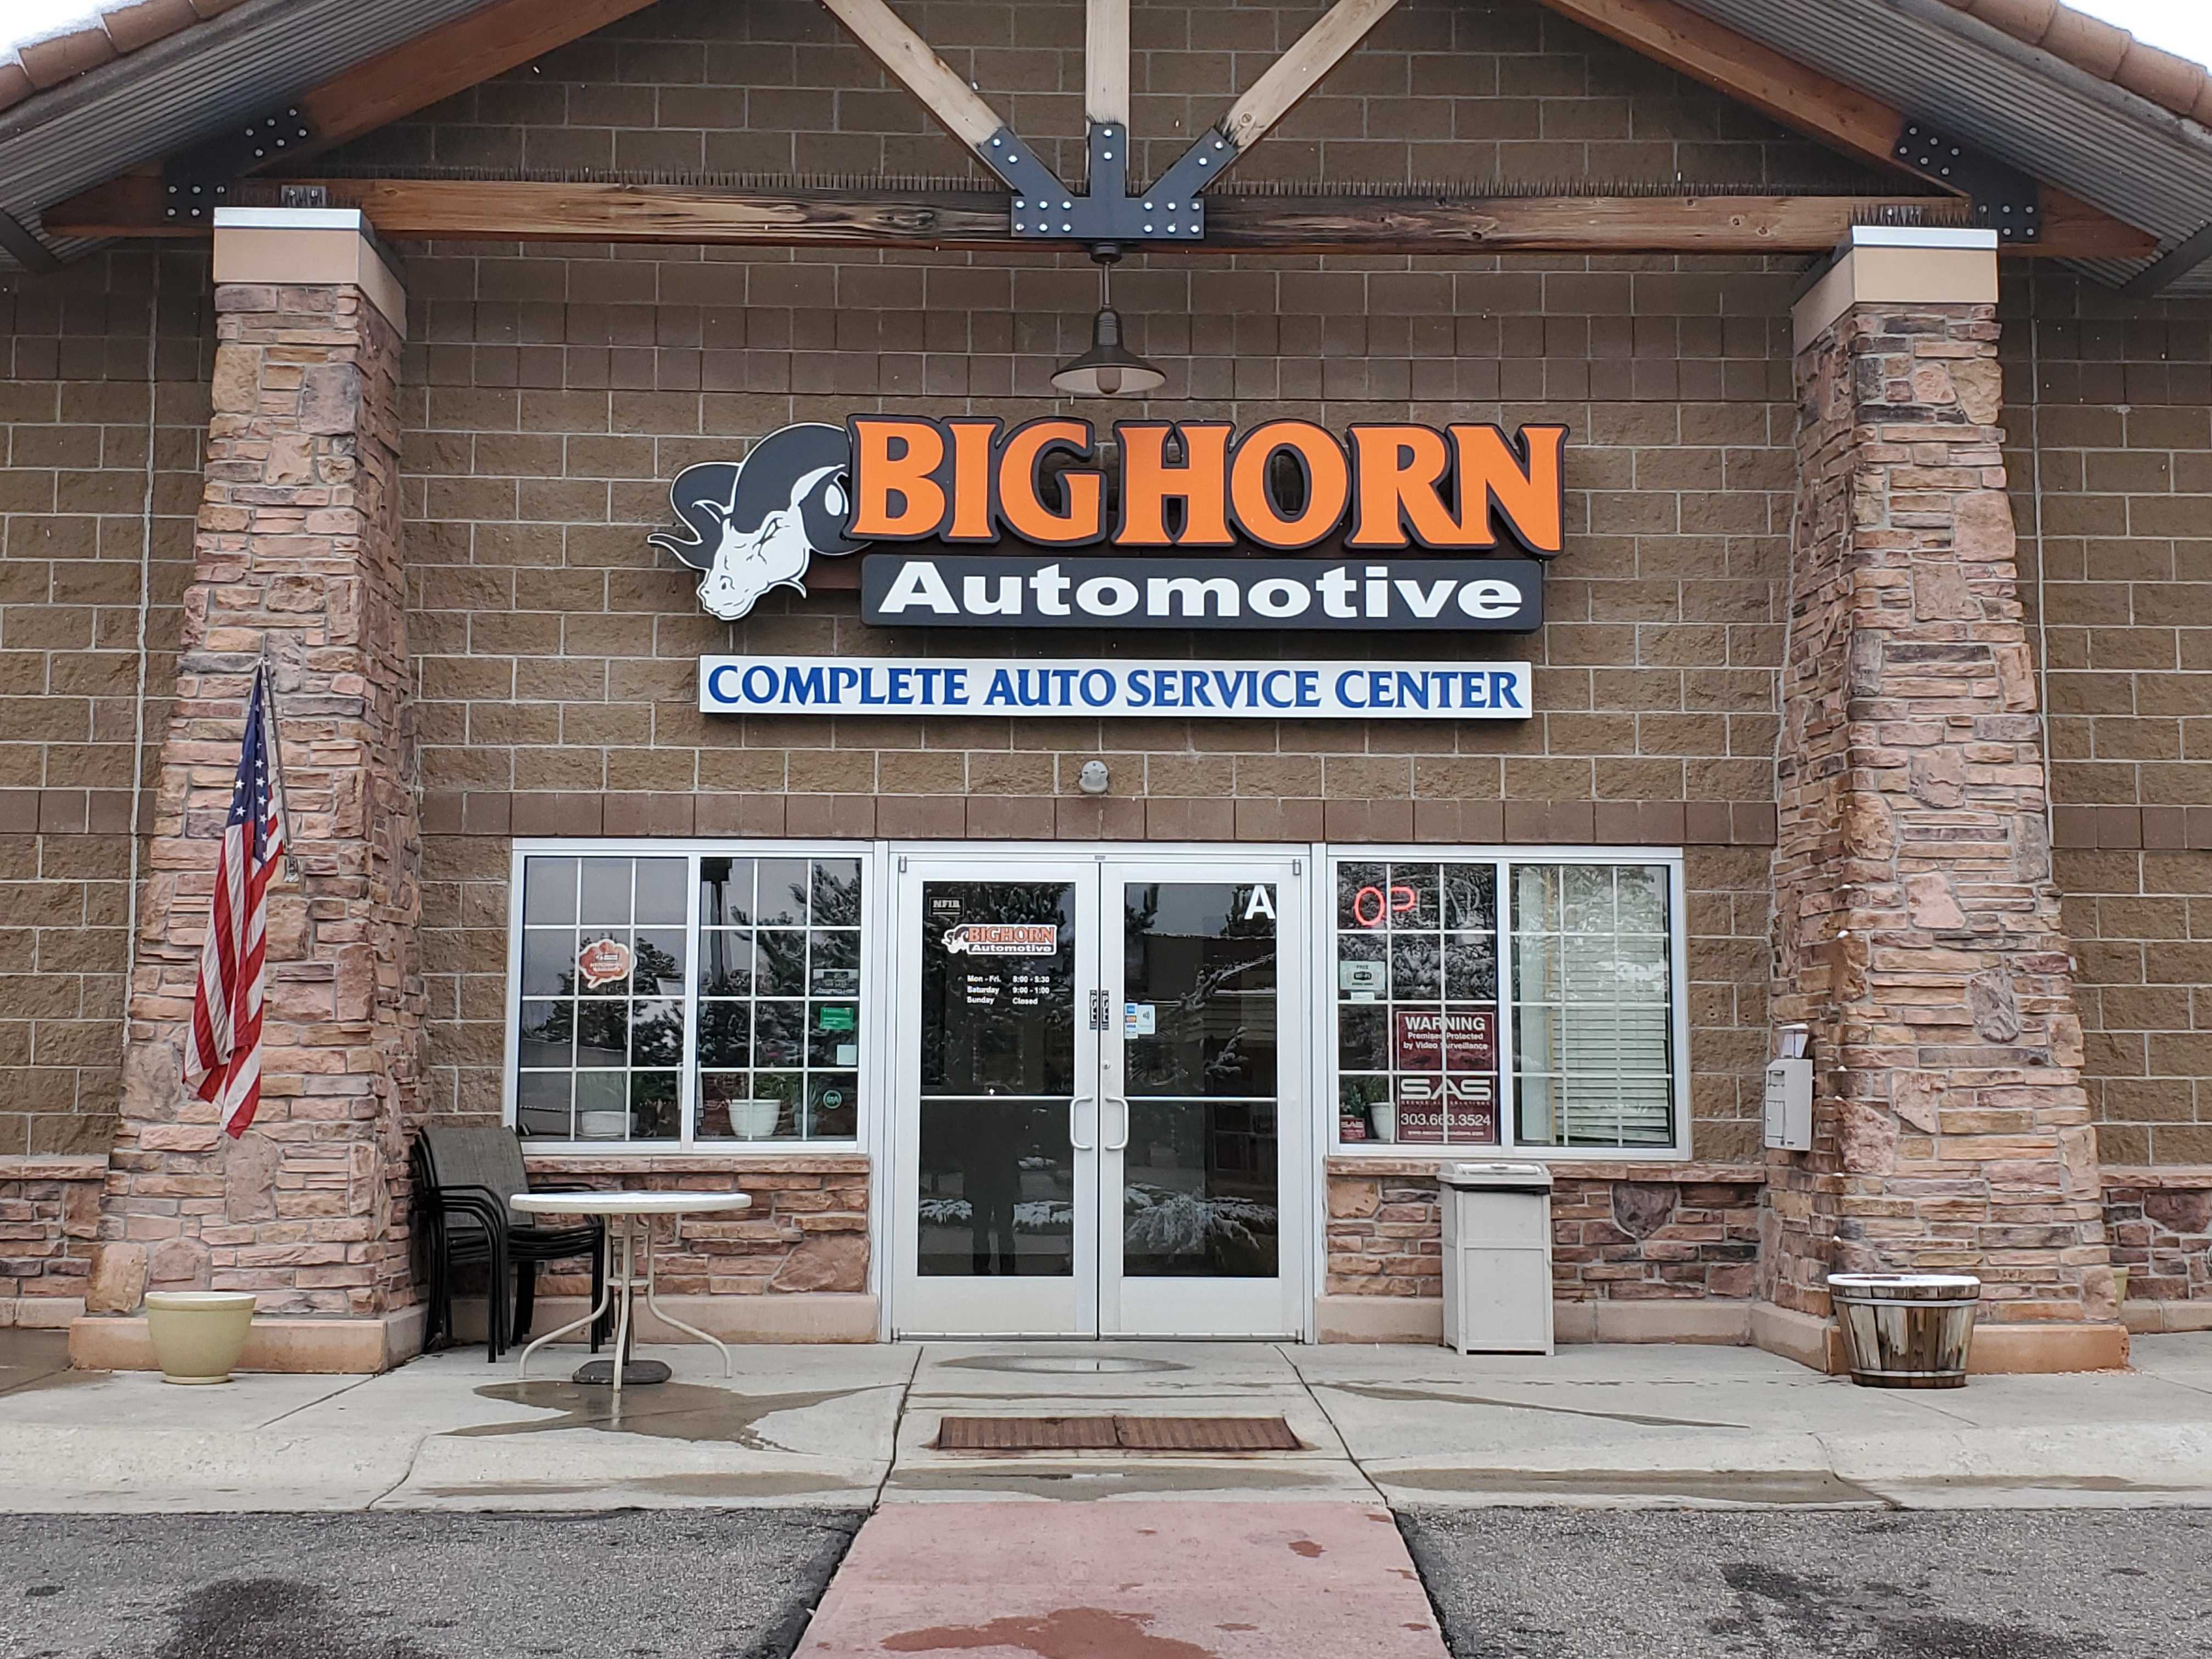 Bighorn Automotive